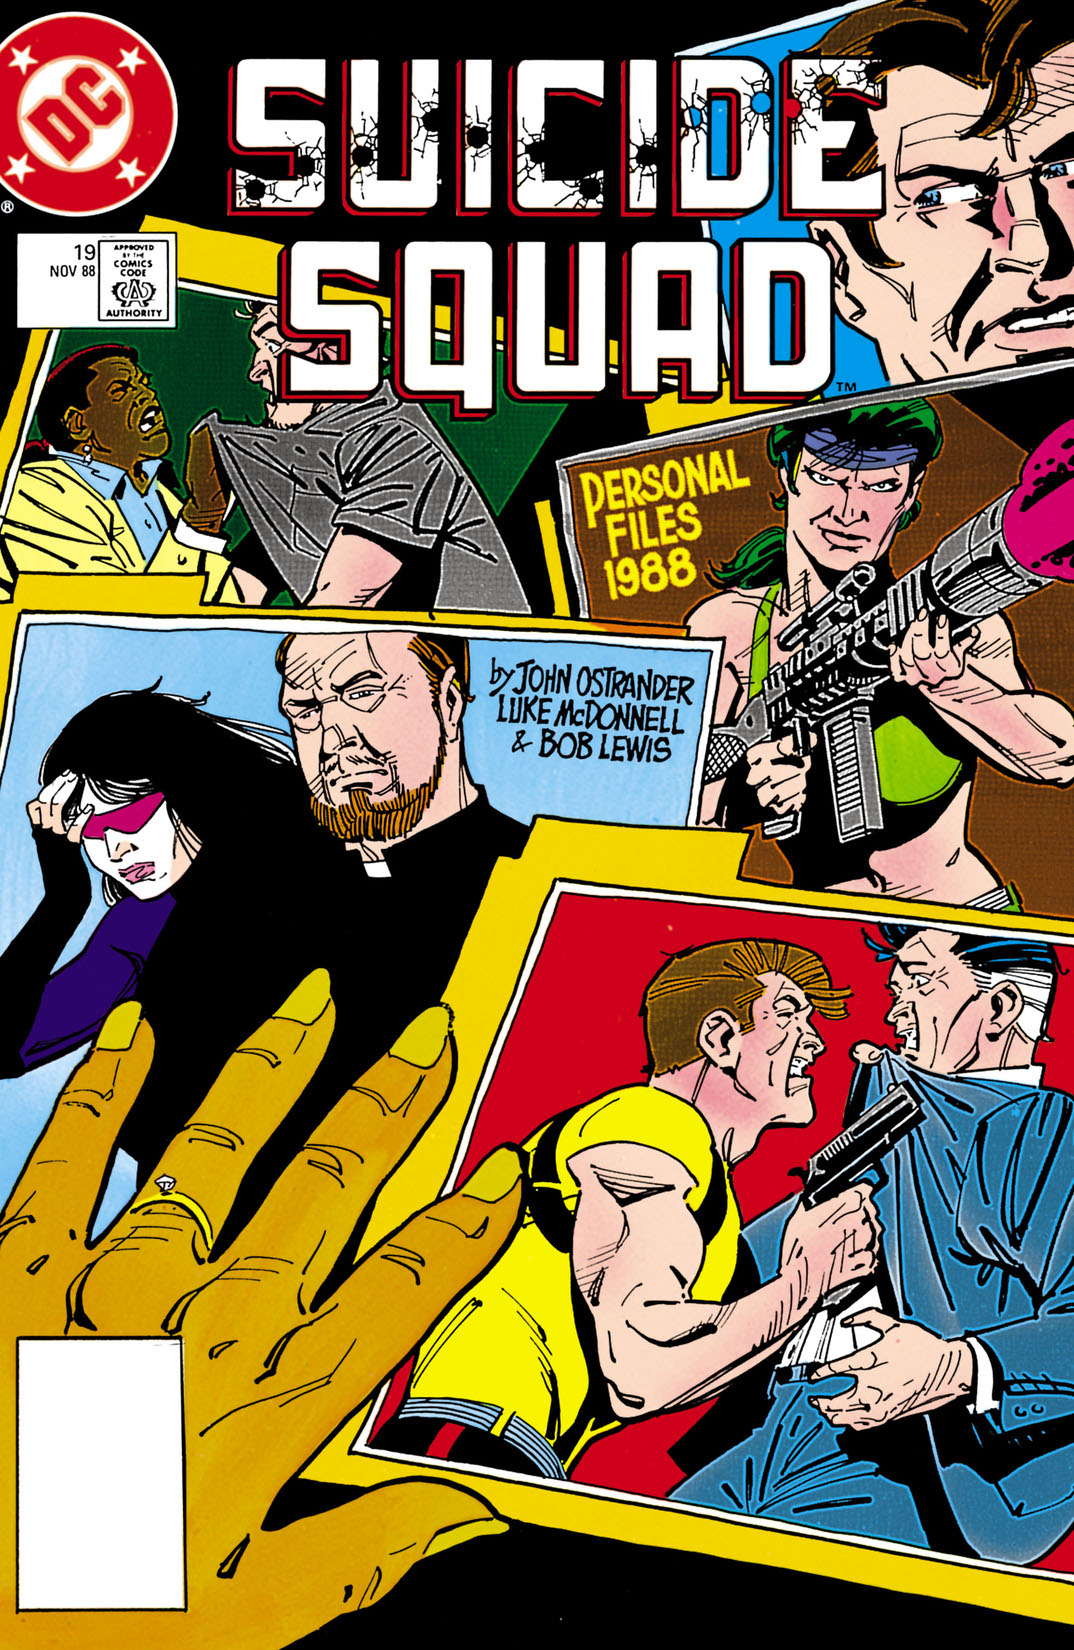 Suicide Squad (1987-) #19 preview images